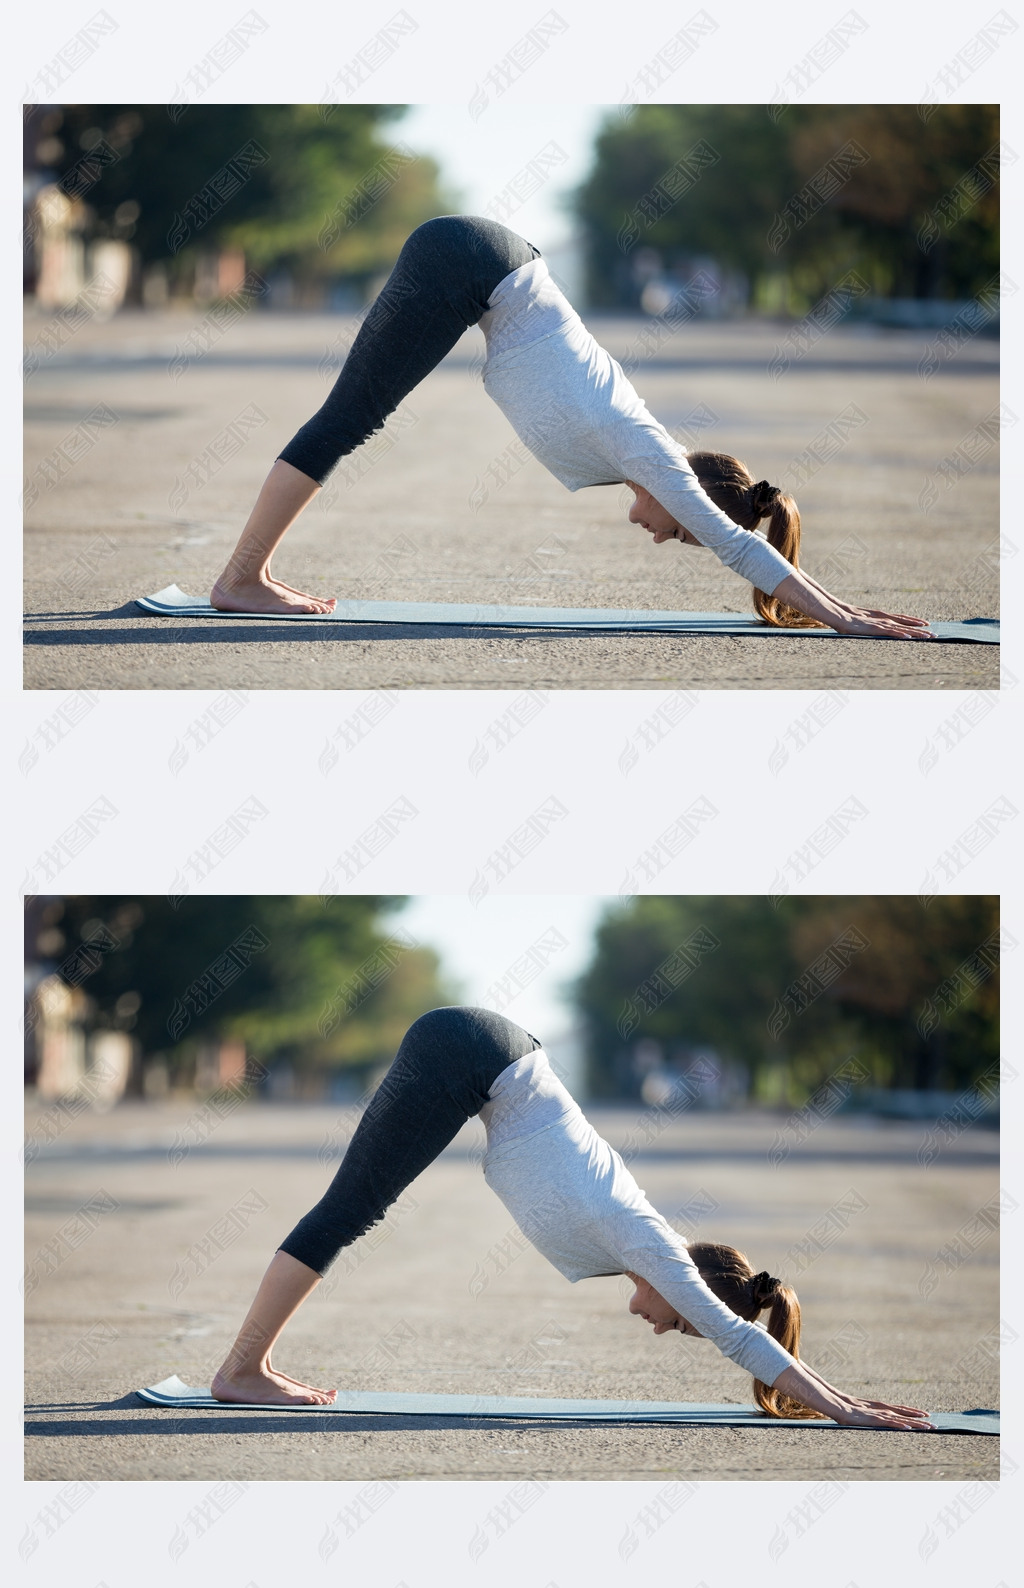 Street yoga: Downward facing dog pose